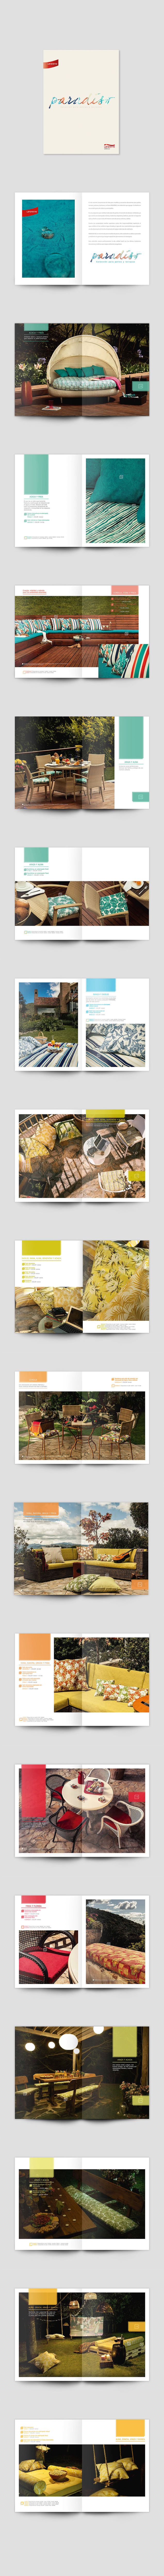 book exteriors fabric textile lafayette bogota colombia design studio magazine